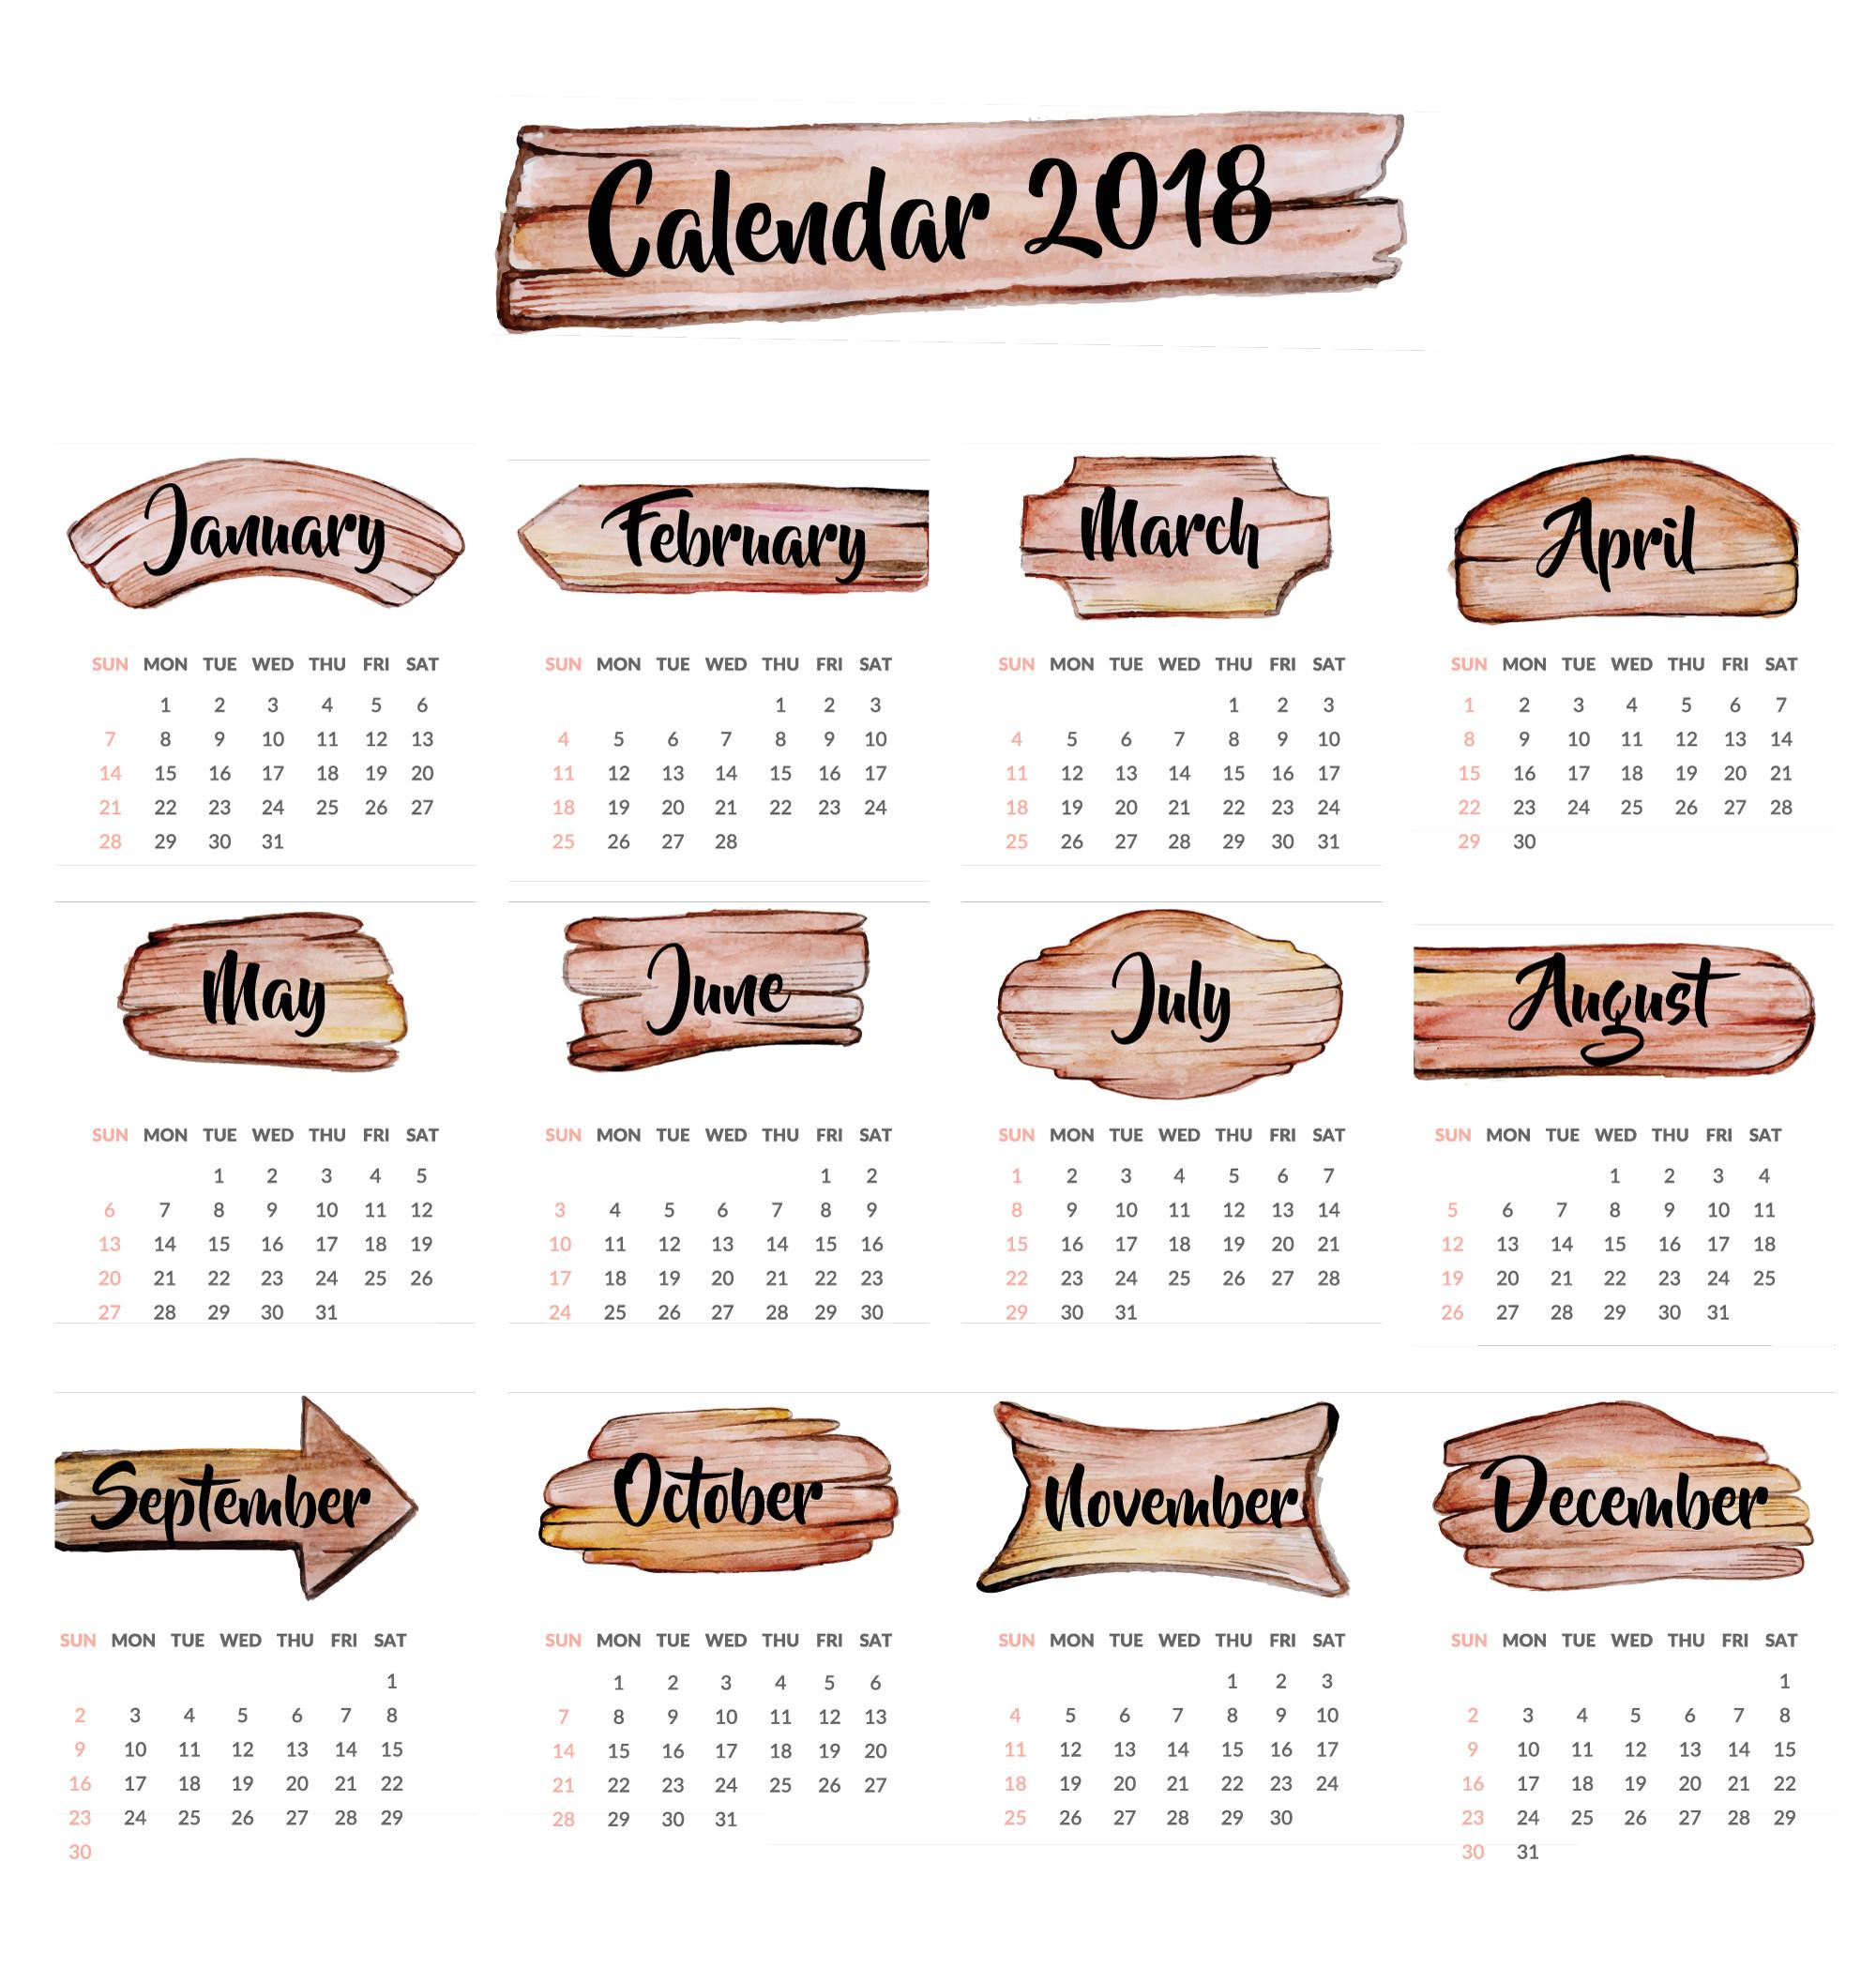 Year Calendar Wallpaper: Download Free 2018 Calendar